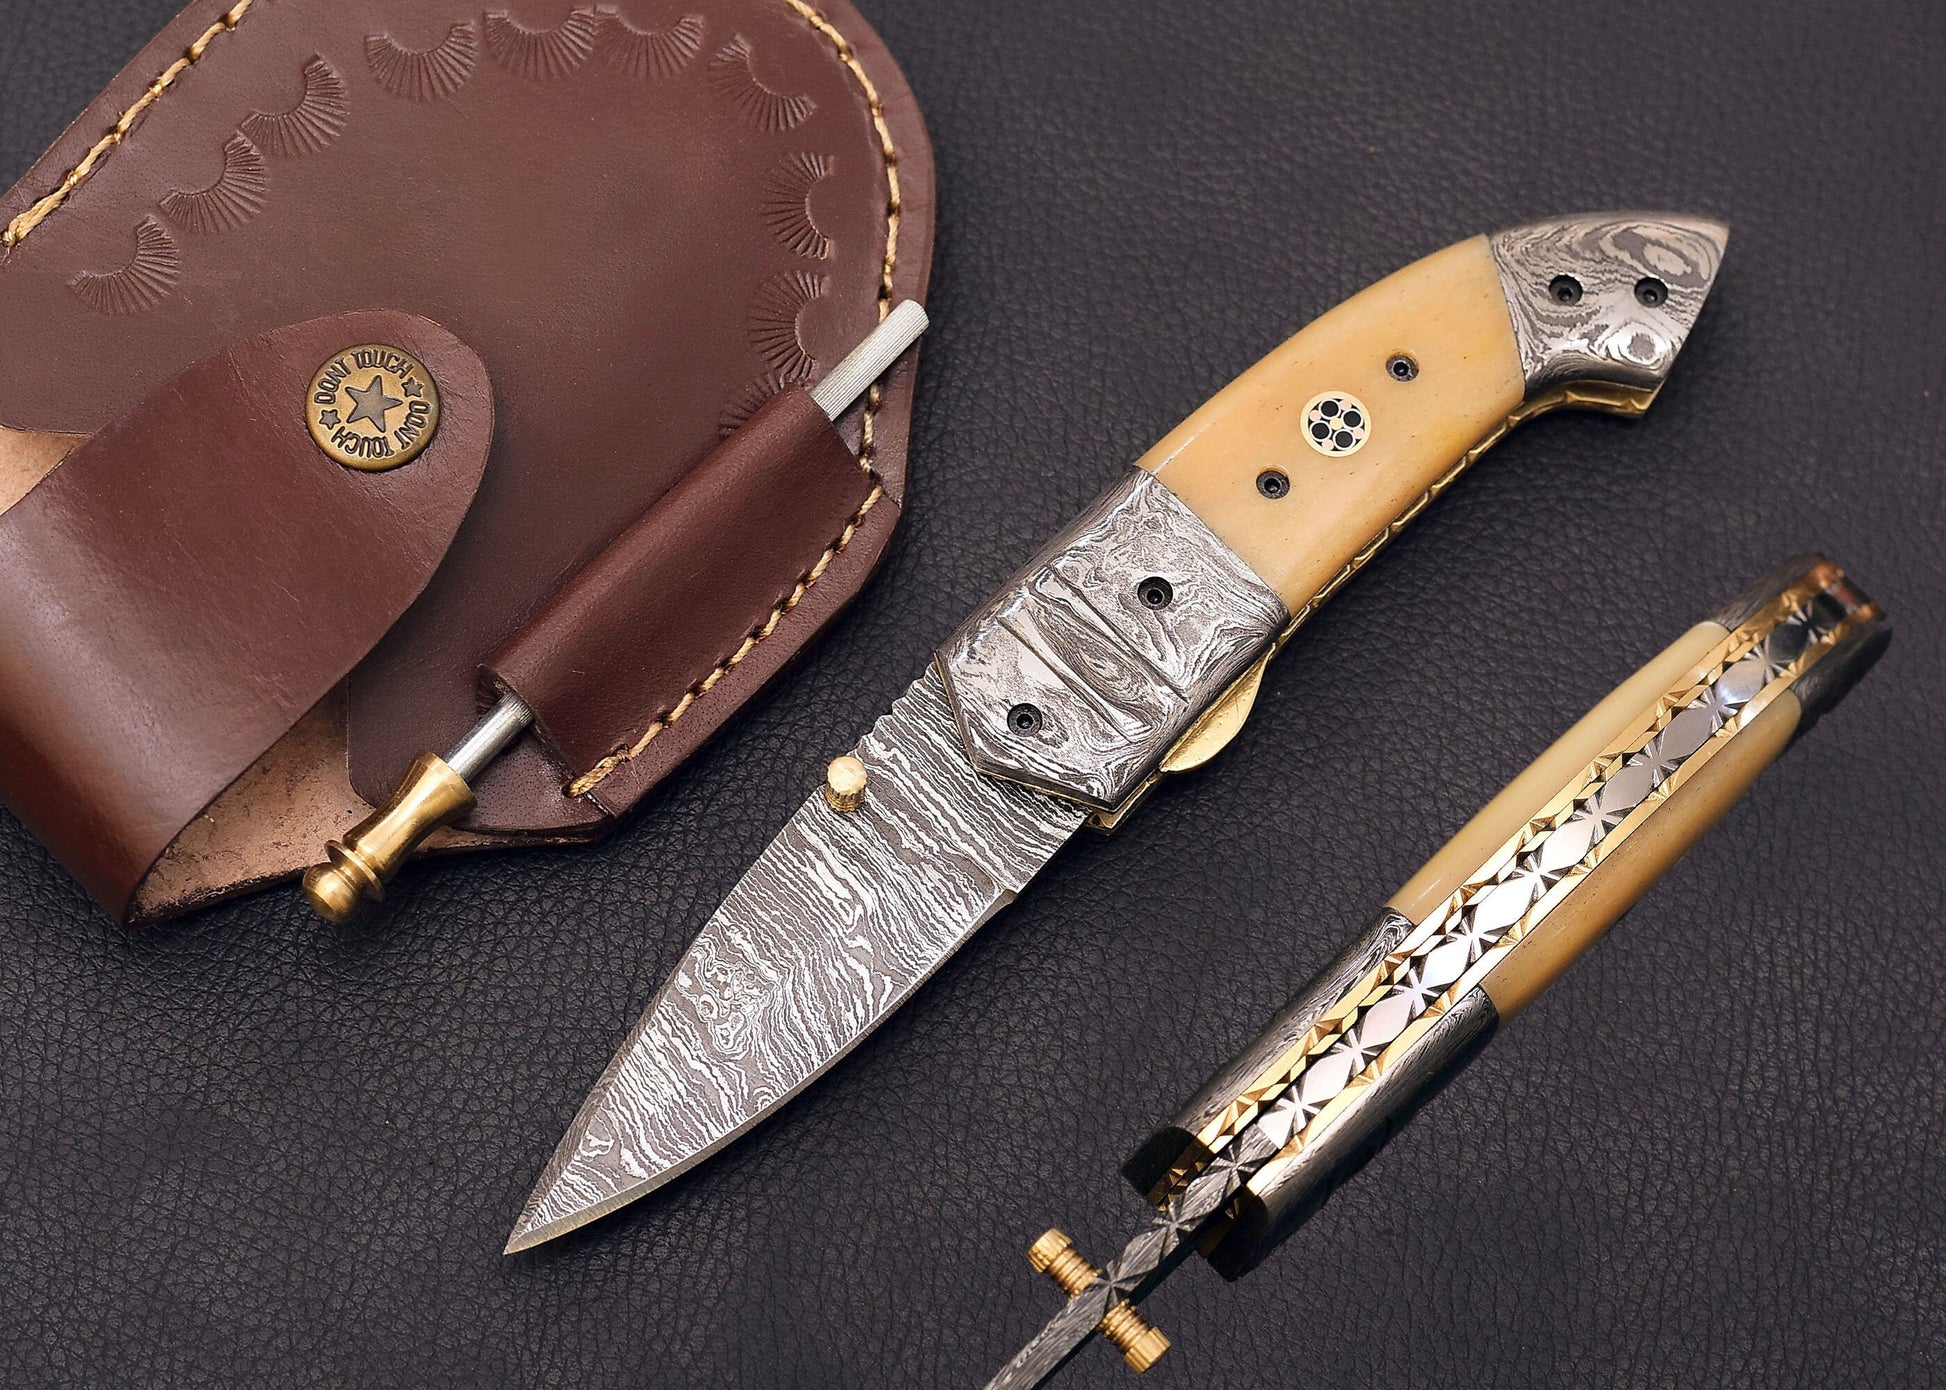 Damascus Steel folding knife with Cow bone handle